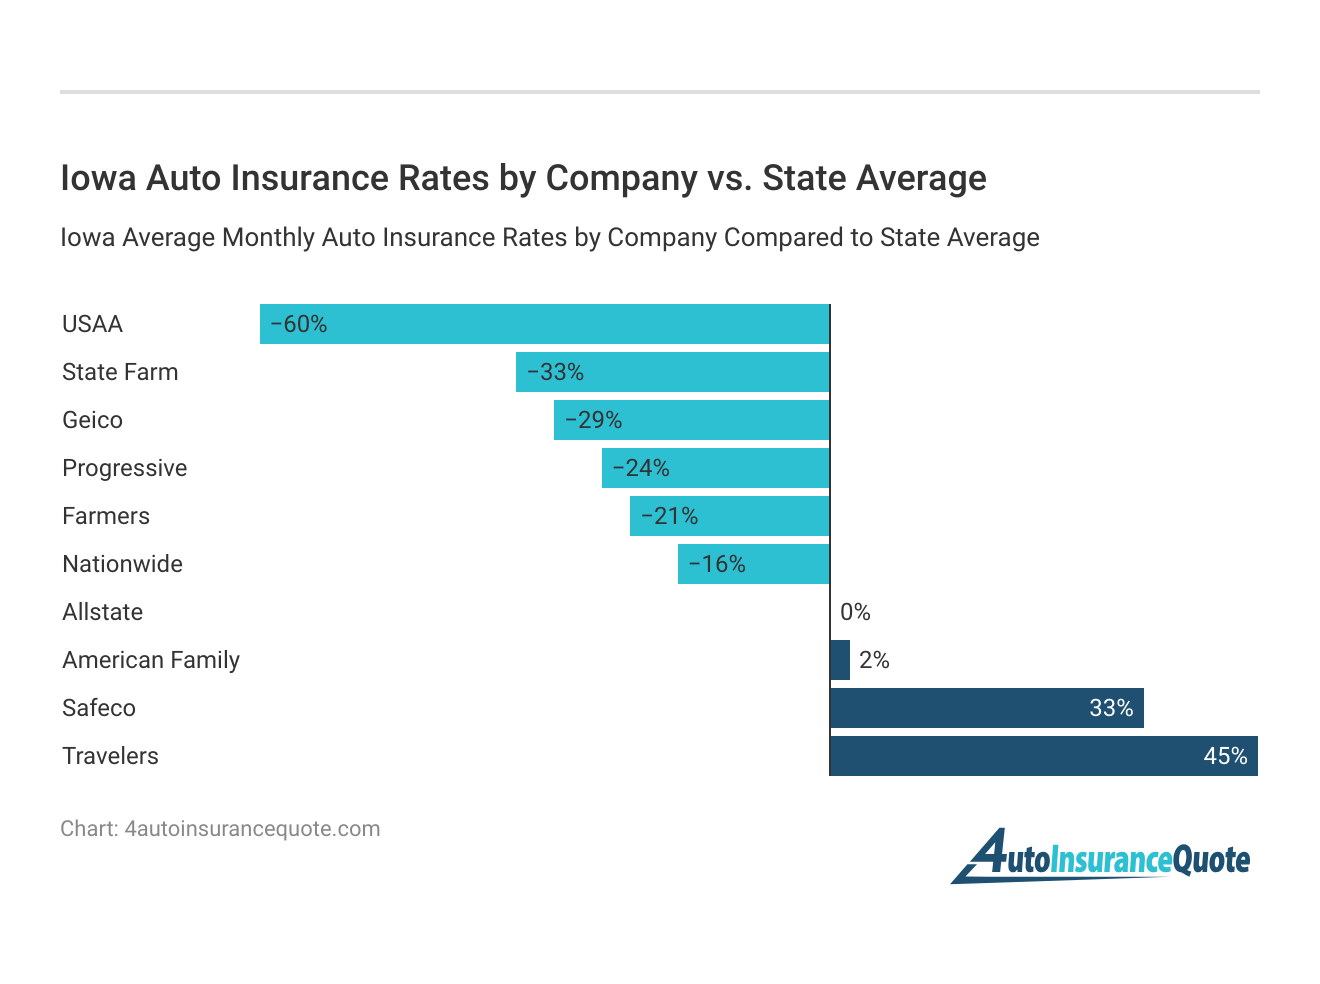 <h3>Iowa Auto Insurance Rates by Company vs. State Average</h3>